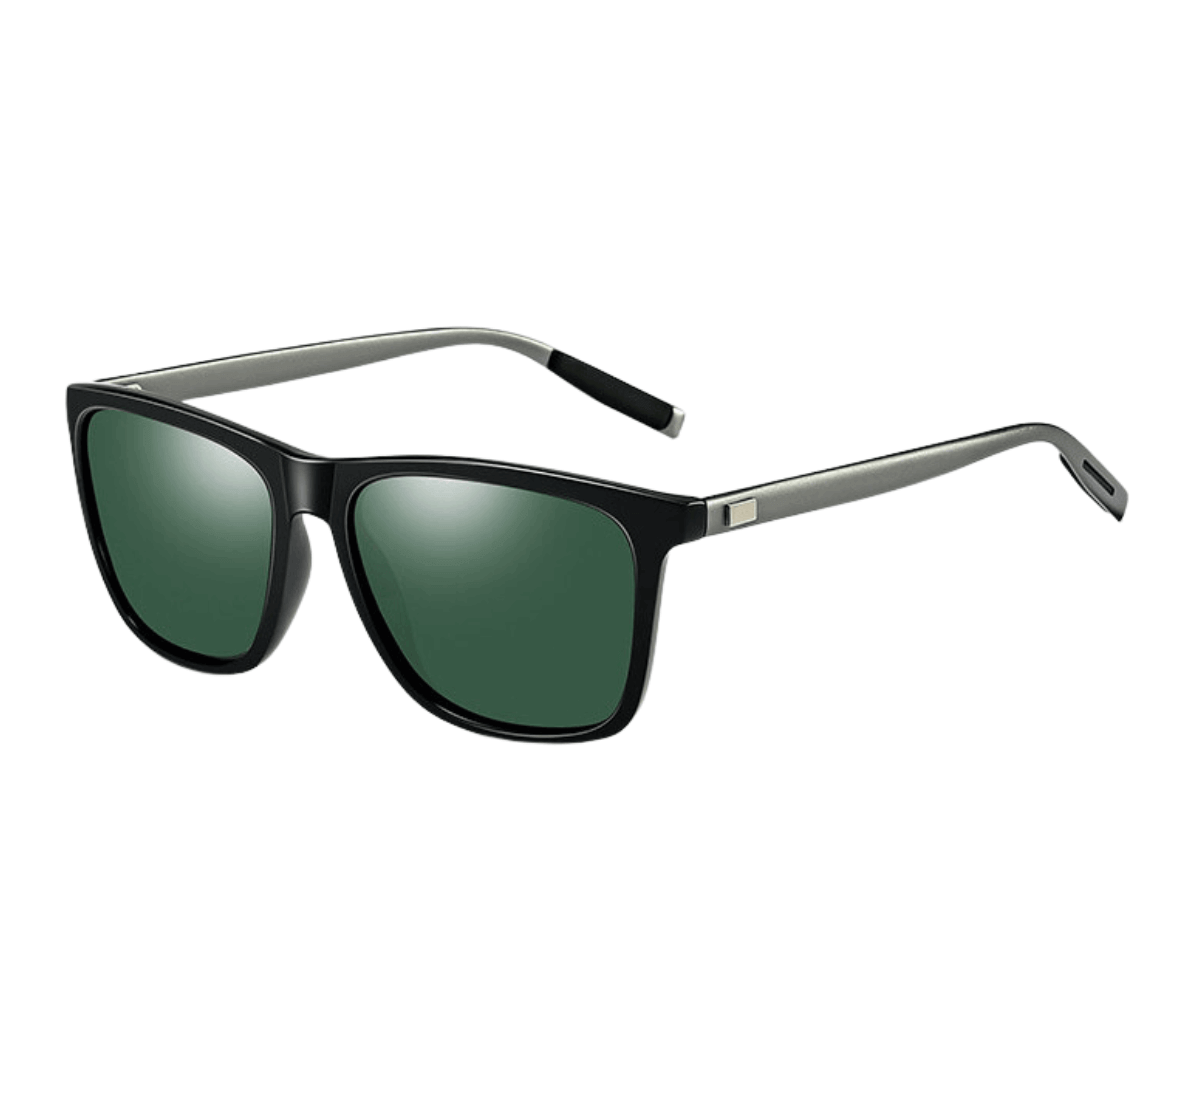 wholesale plastic sunglasses, sunglasses in bulk cheap, plastic polarized sunglasses, plastic sunglasses, plastic sunglasses manufacturers, China sunglasses supplier